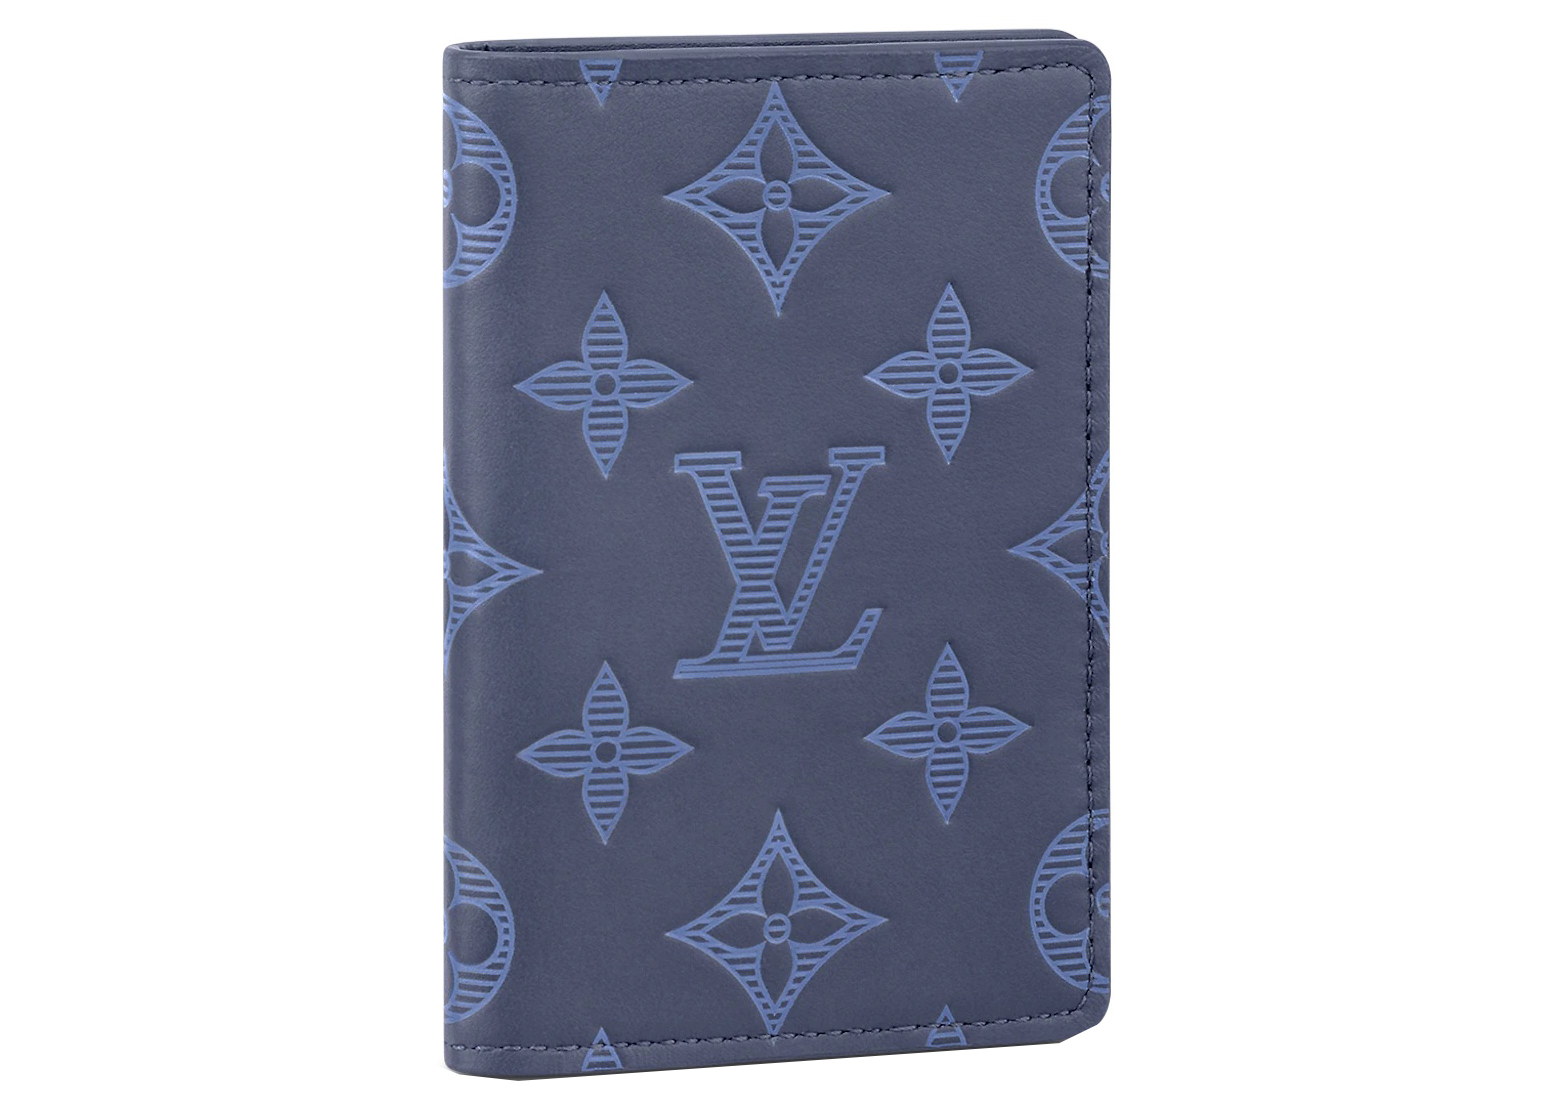 Louis Vuitton Pocket Organizer Monogram Shadow Navy Blue